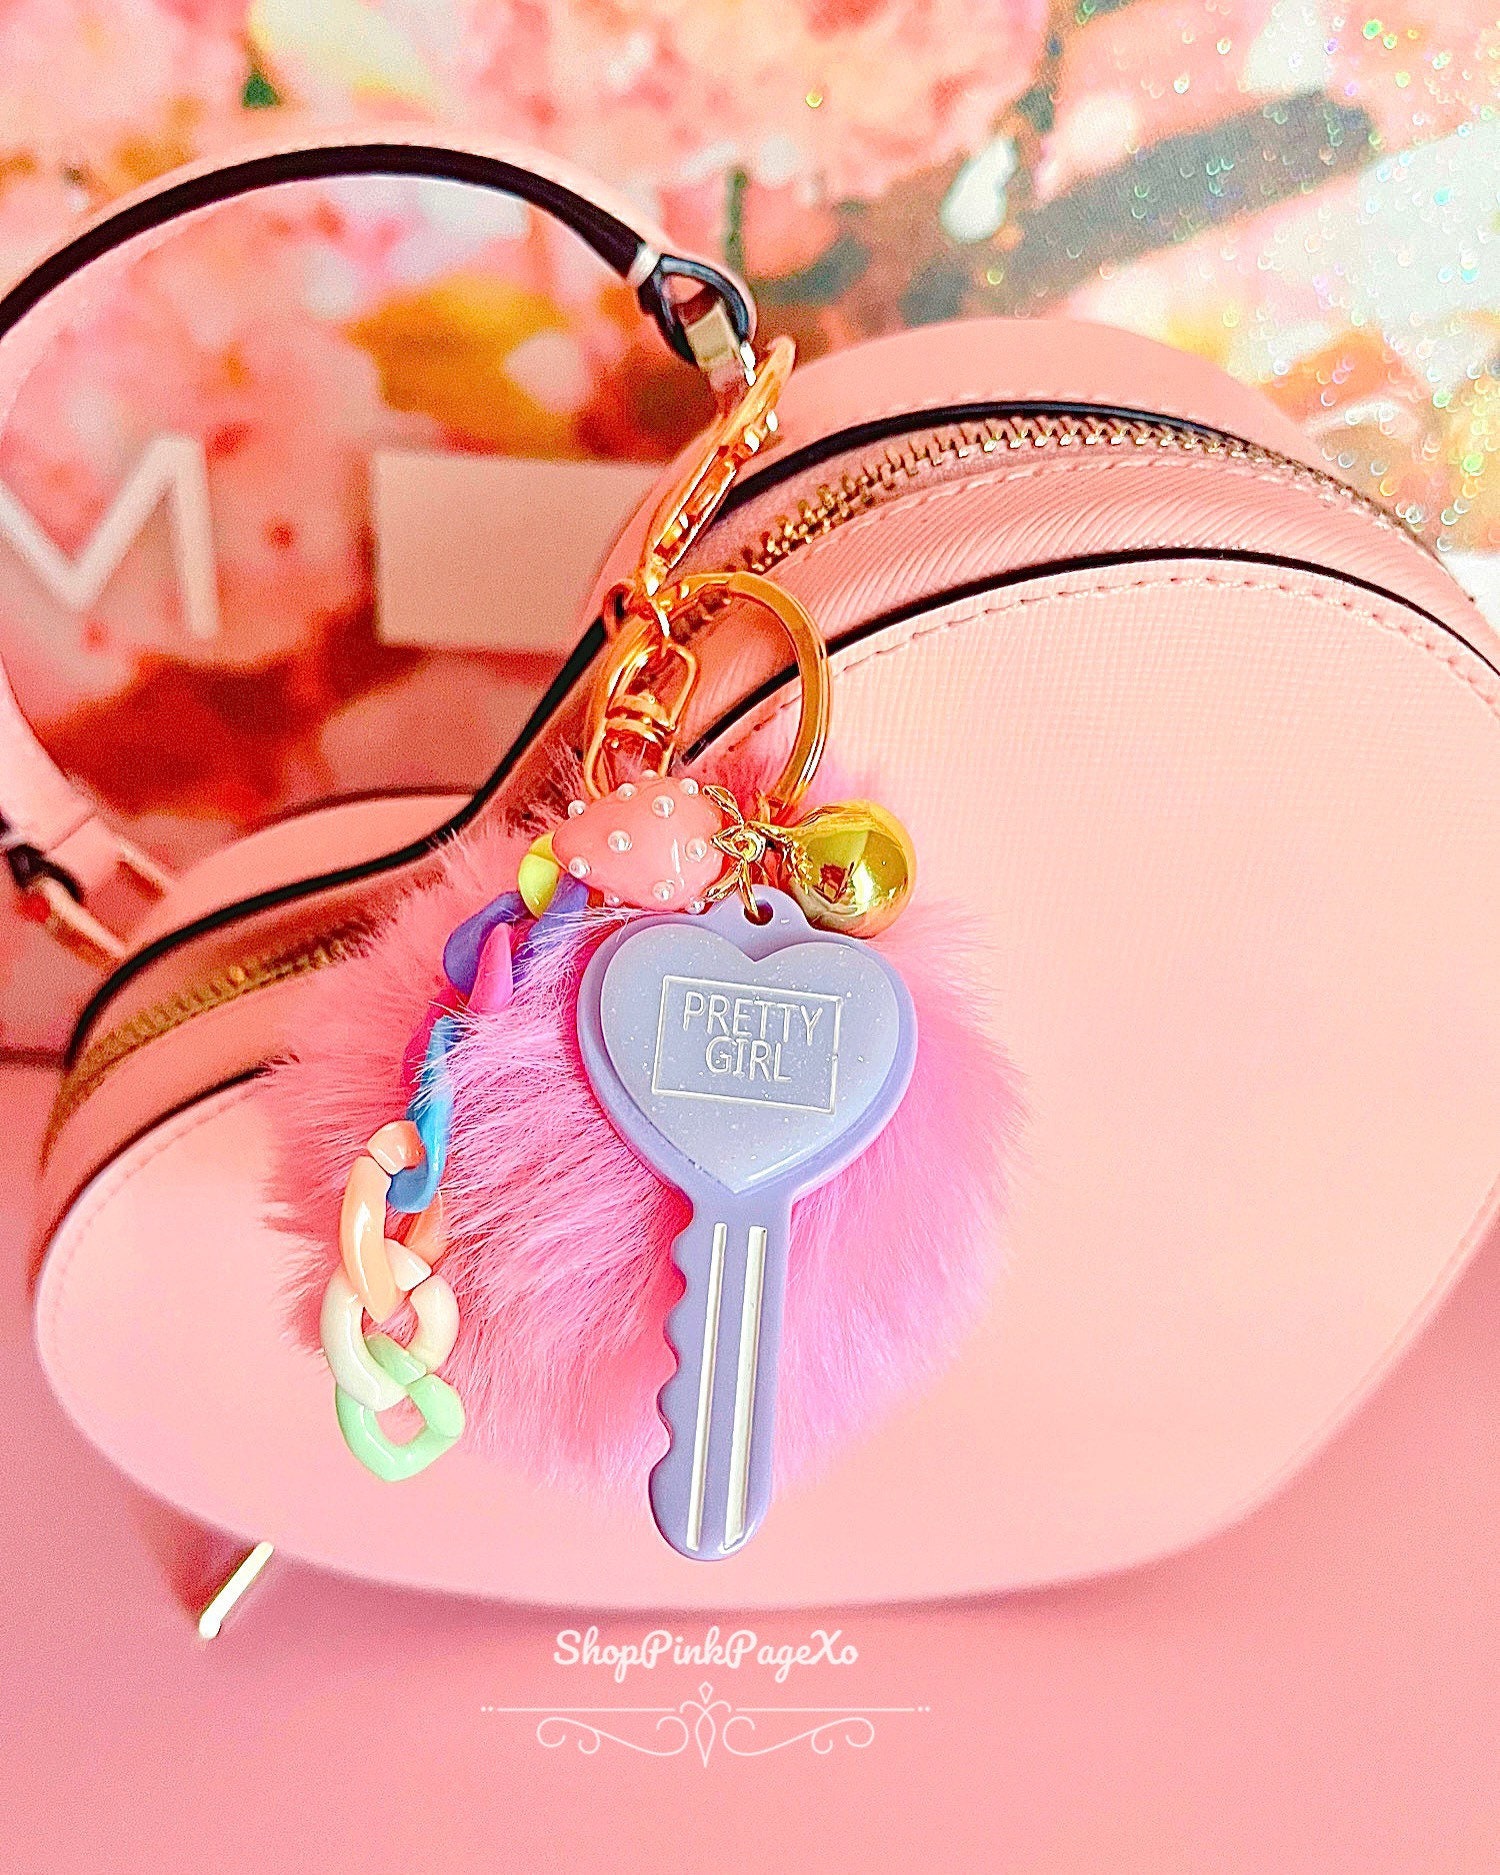 Plush Keychain With Creative Unicorn Design, Stylish Personalized Pom Pom  Bag Charm For Car Keys, Handbags